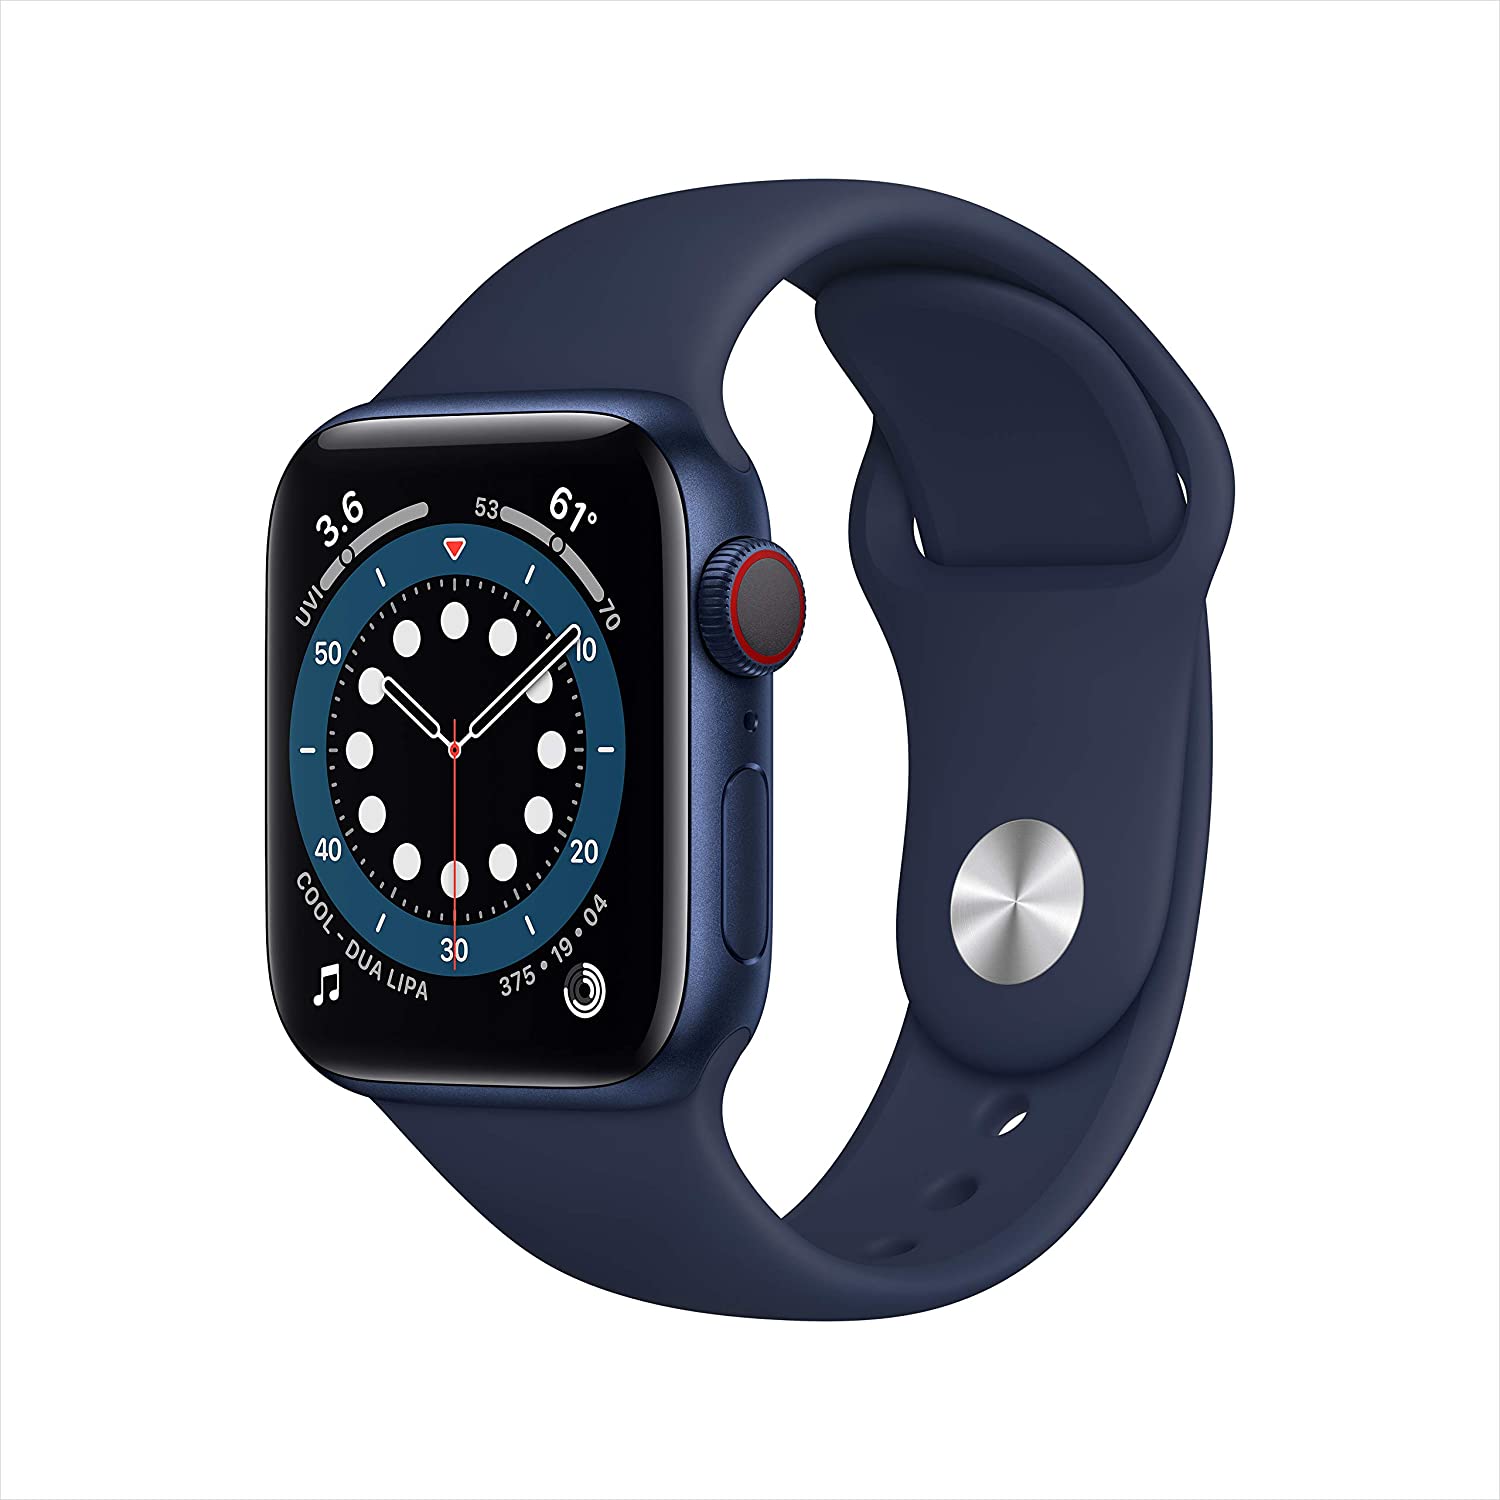 Apple Watch Series 6 Сотовая связь